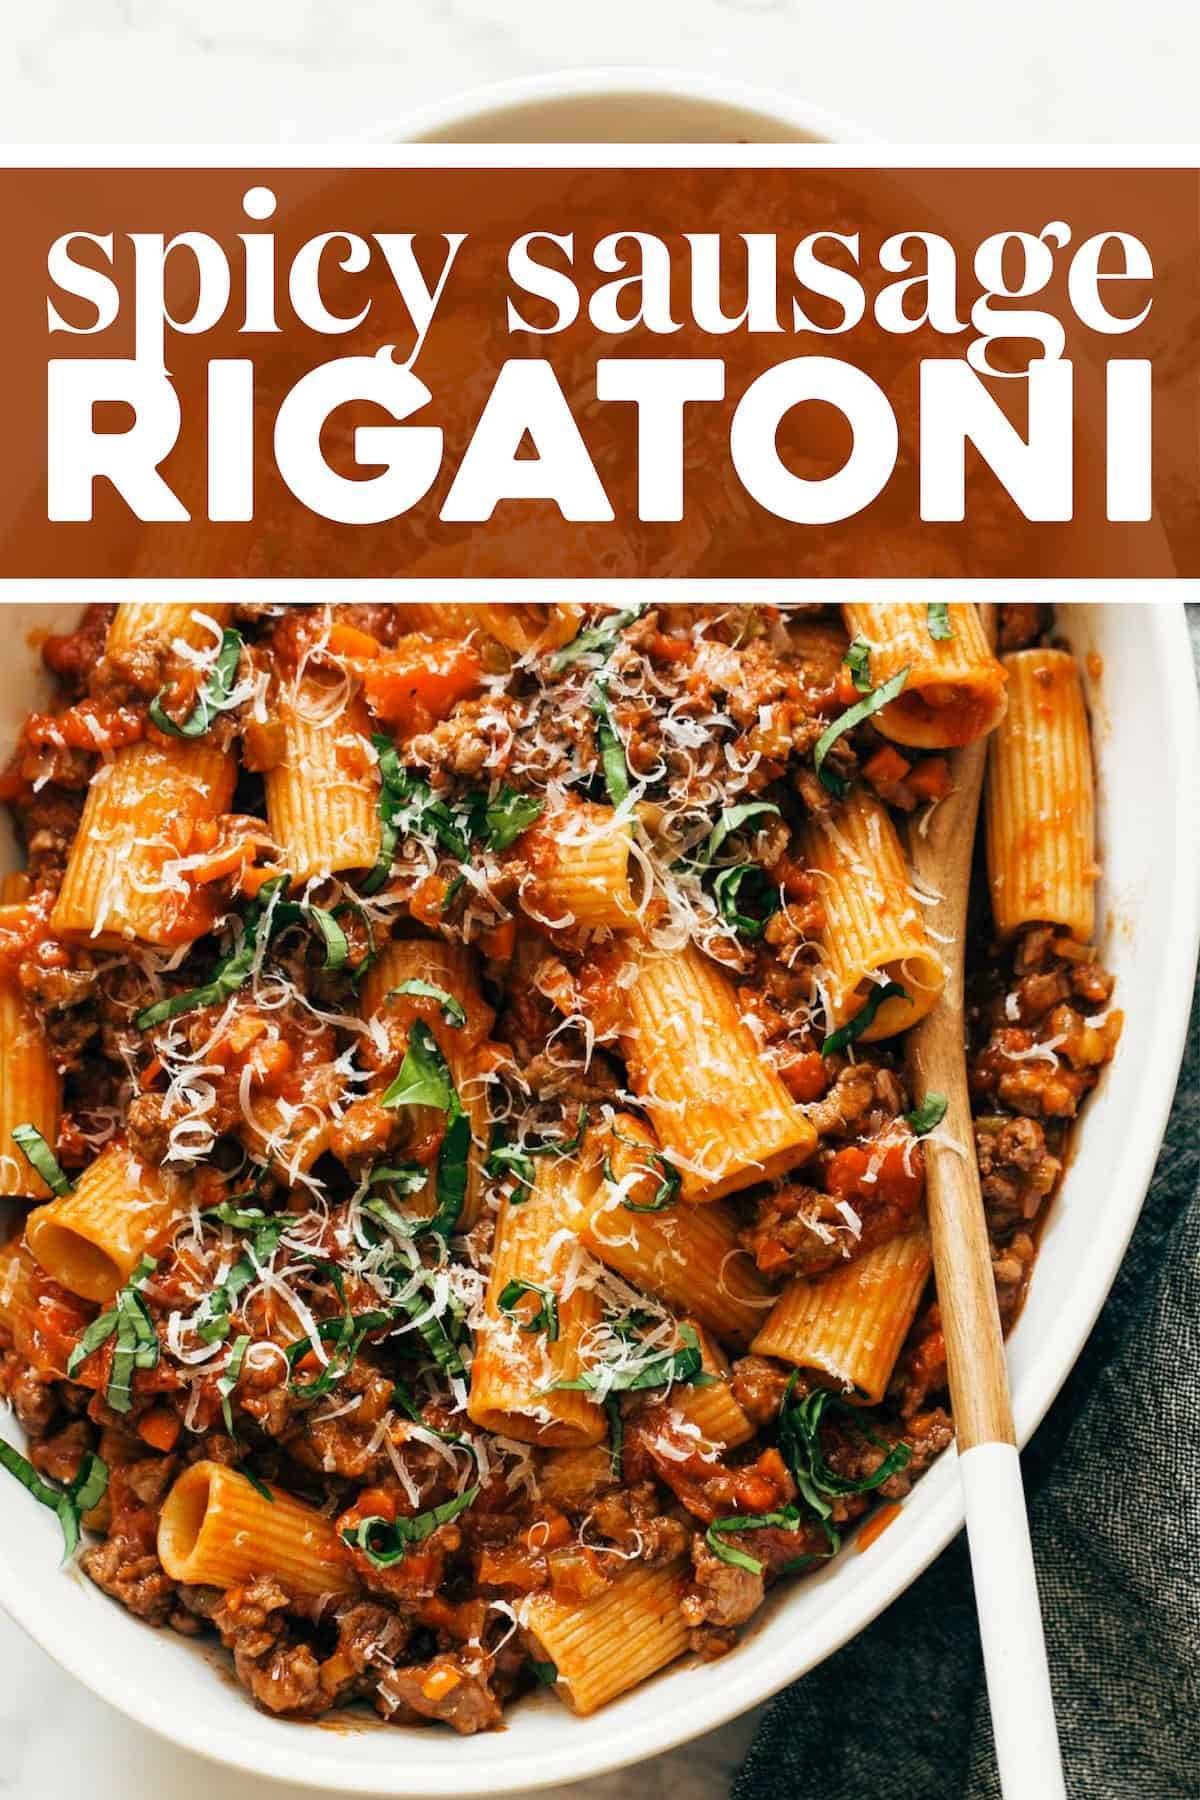 Spicy Sausage Rigatoni Recipe - Pinch of Yum